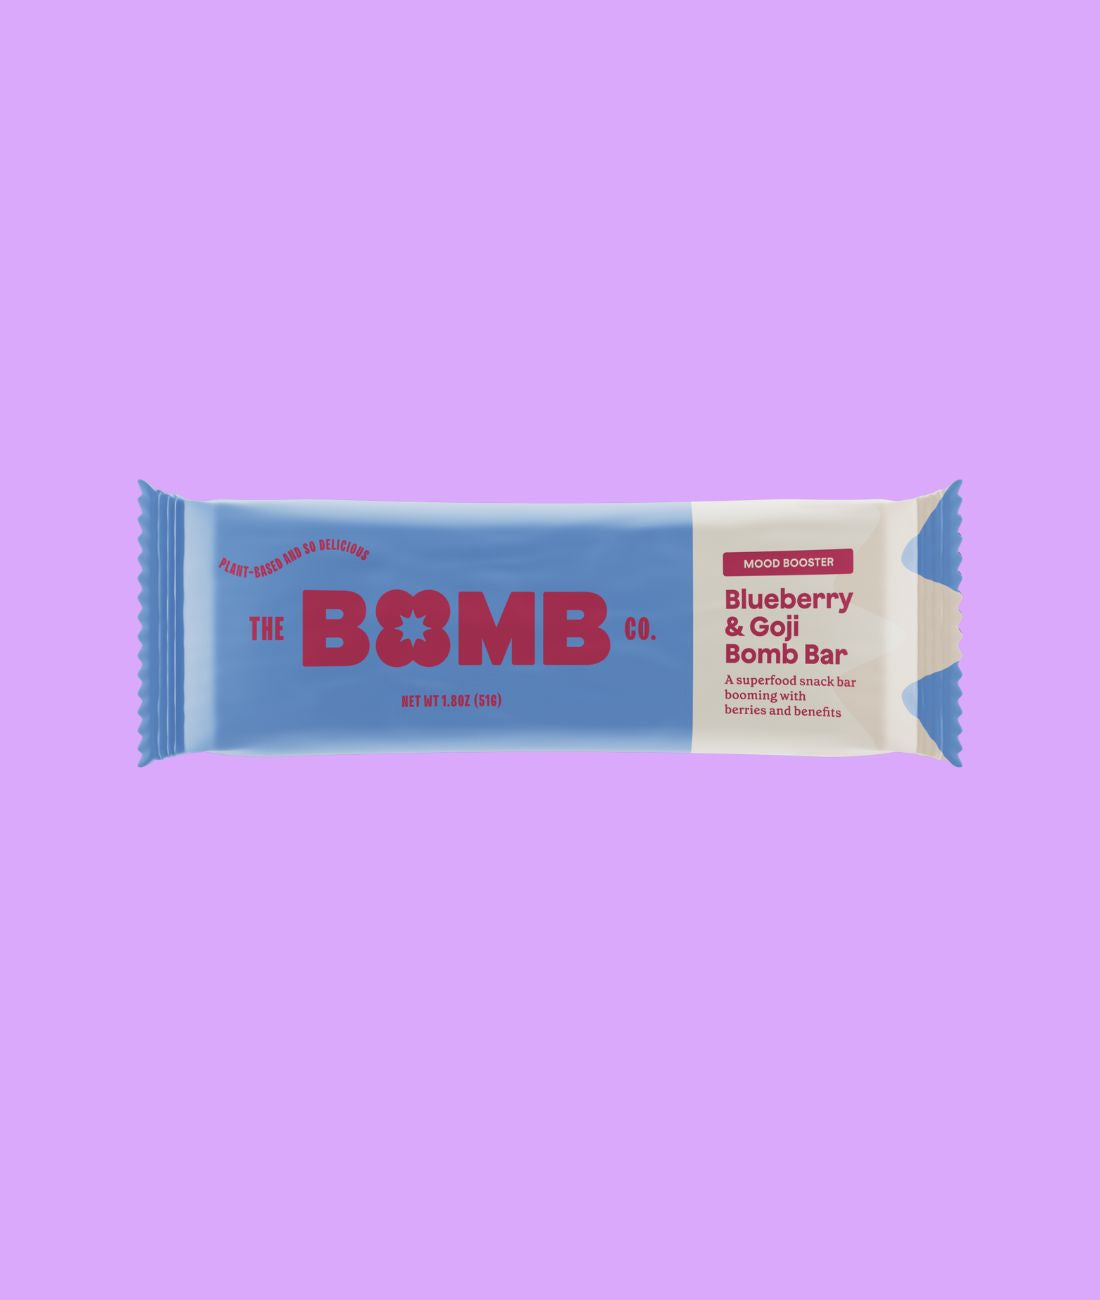 Blueberry & Goji Bomb Bar